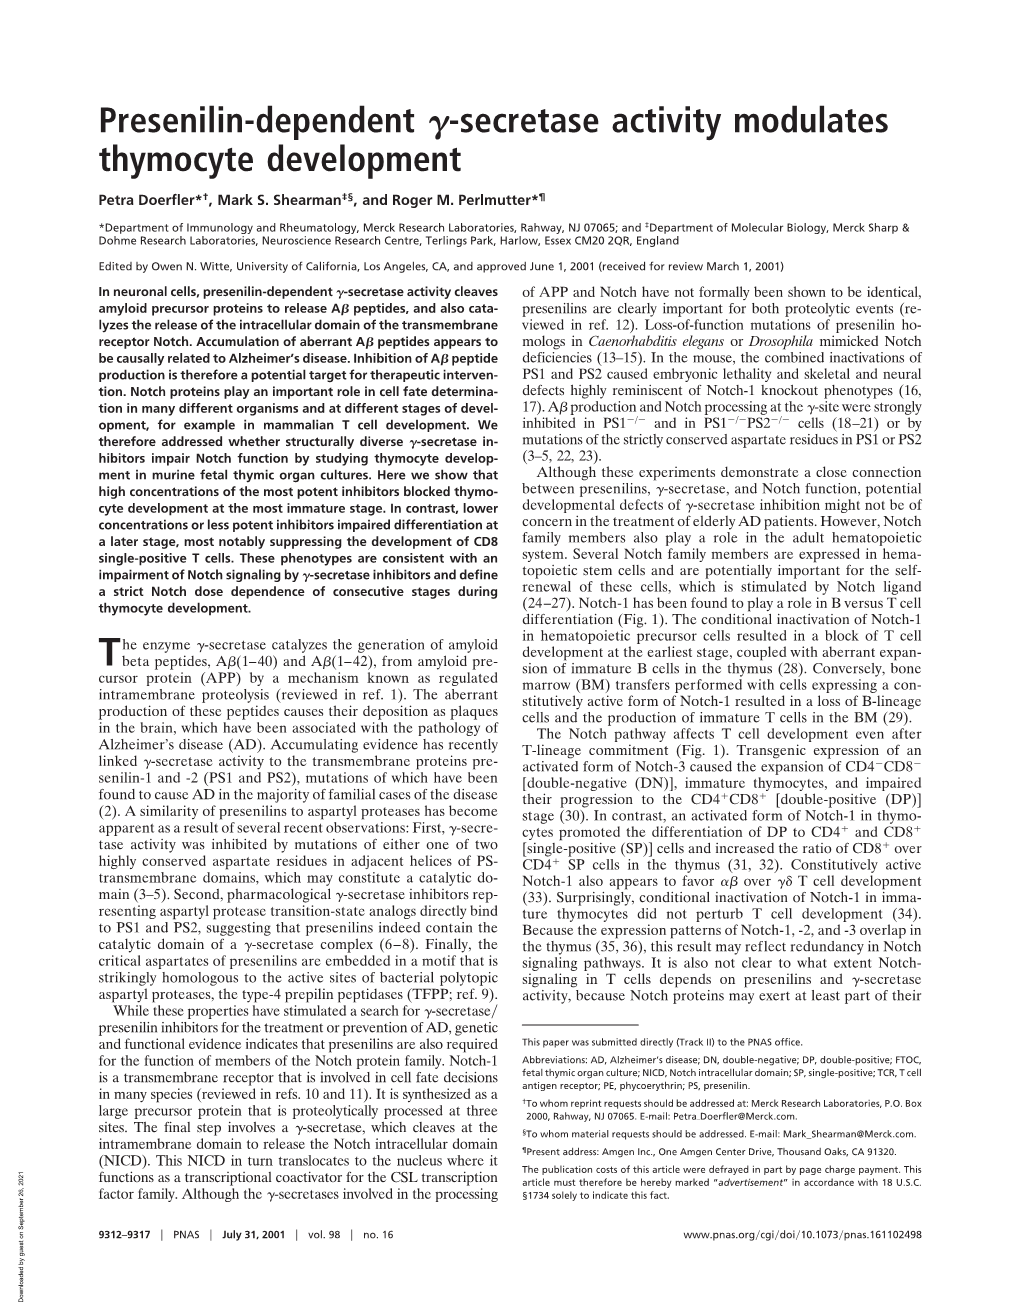 Presenilin-Dependent -Secretase Activity Modulates Thymocyte